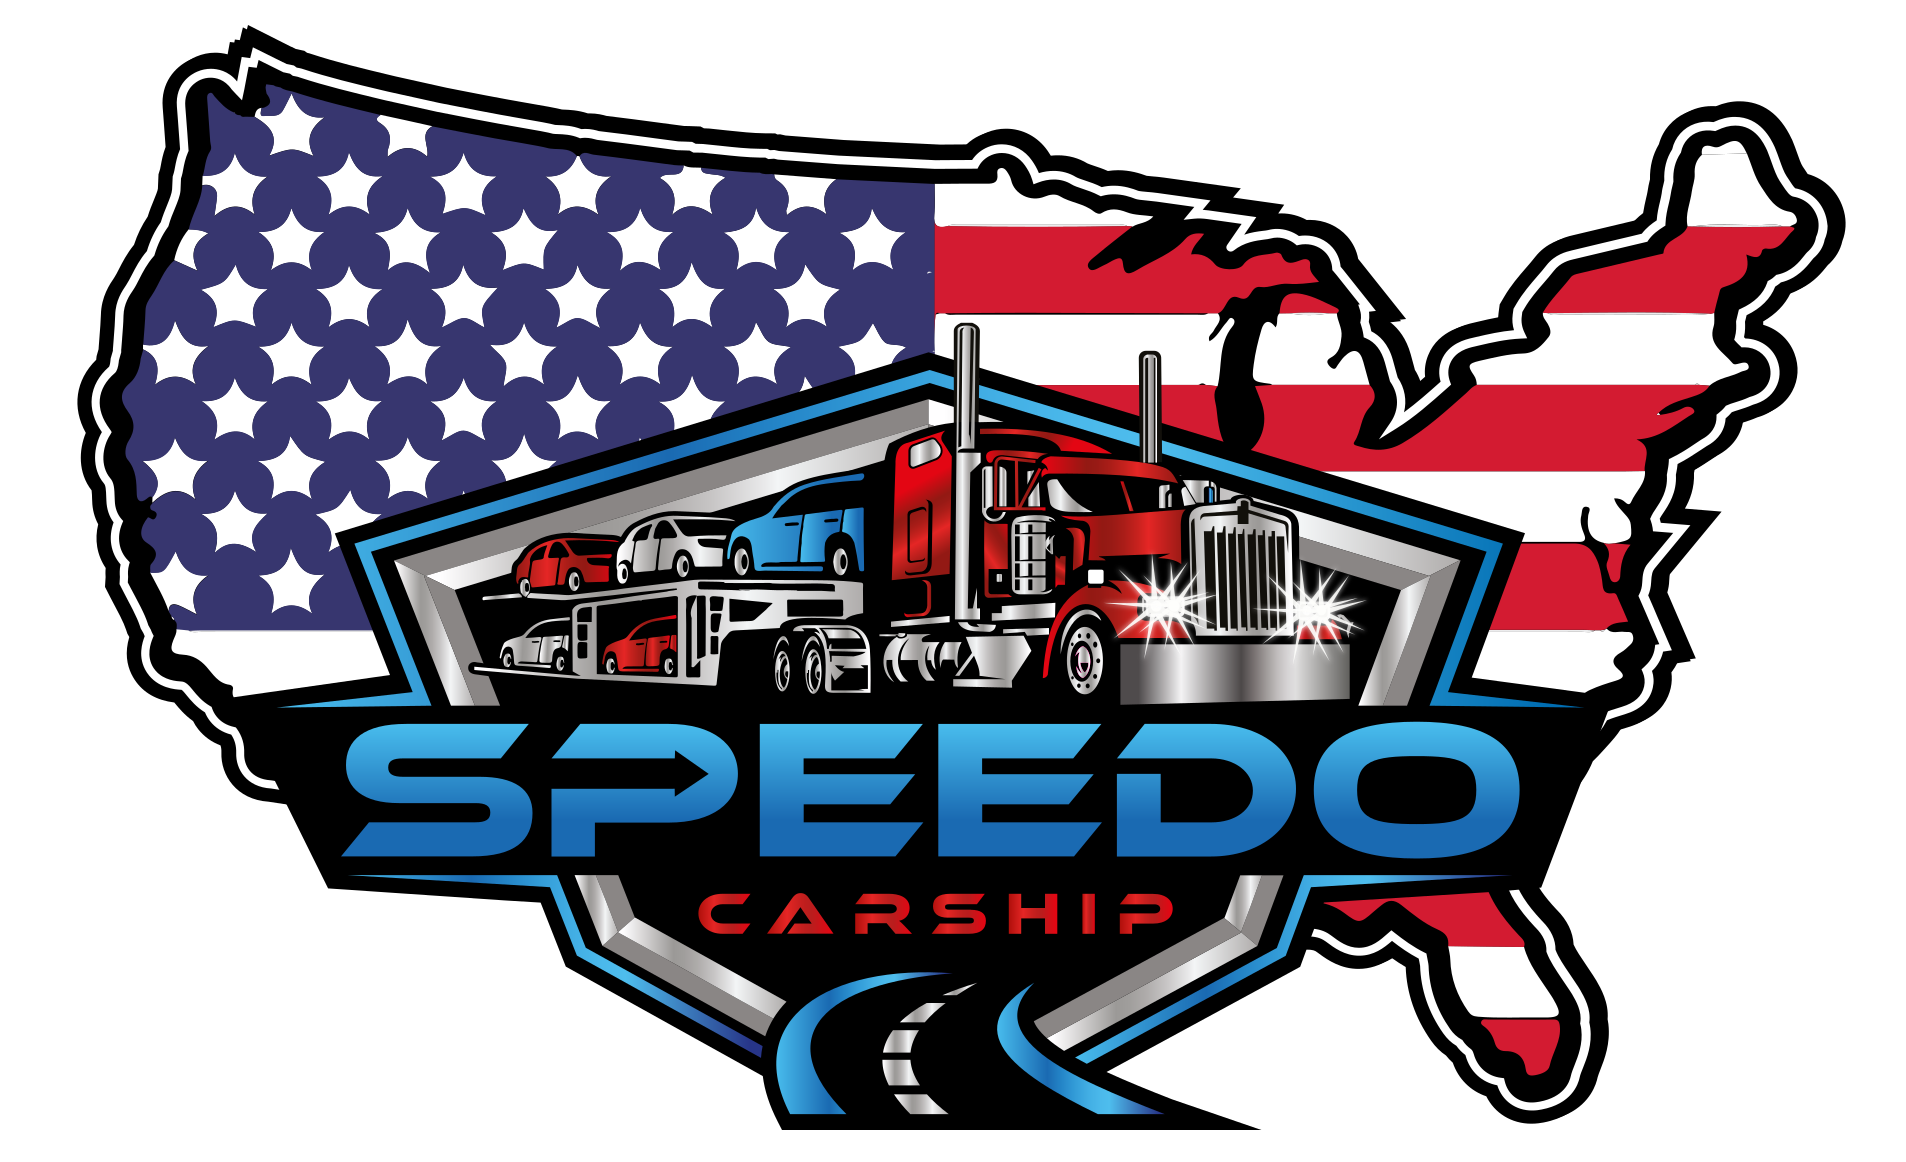 Speedo Carship LLC